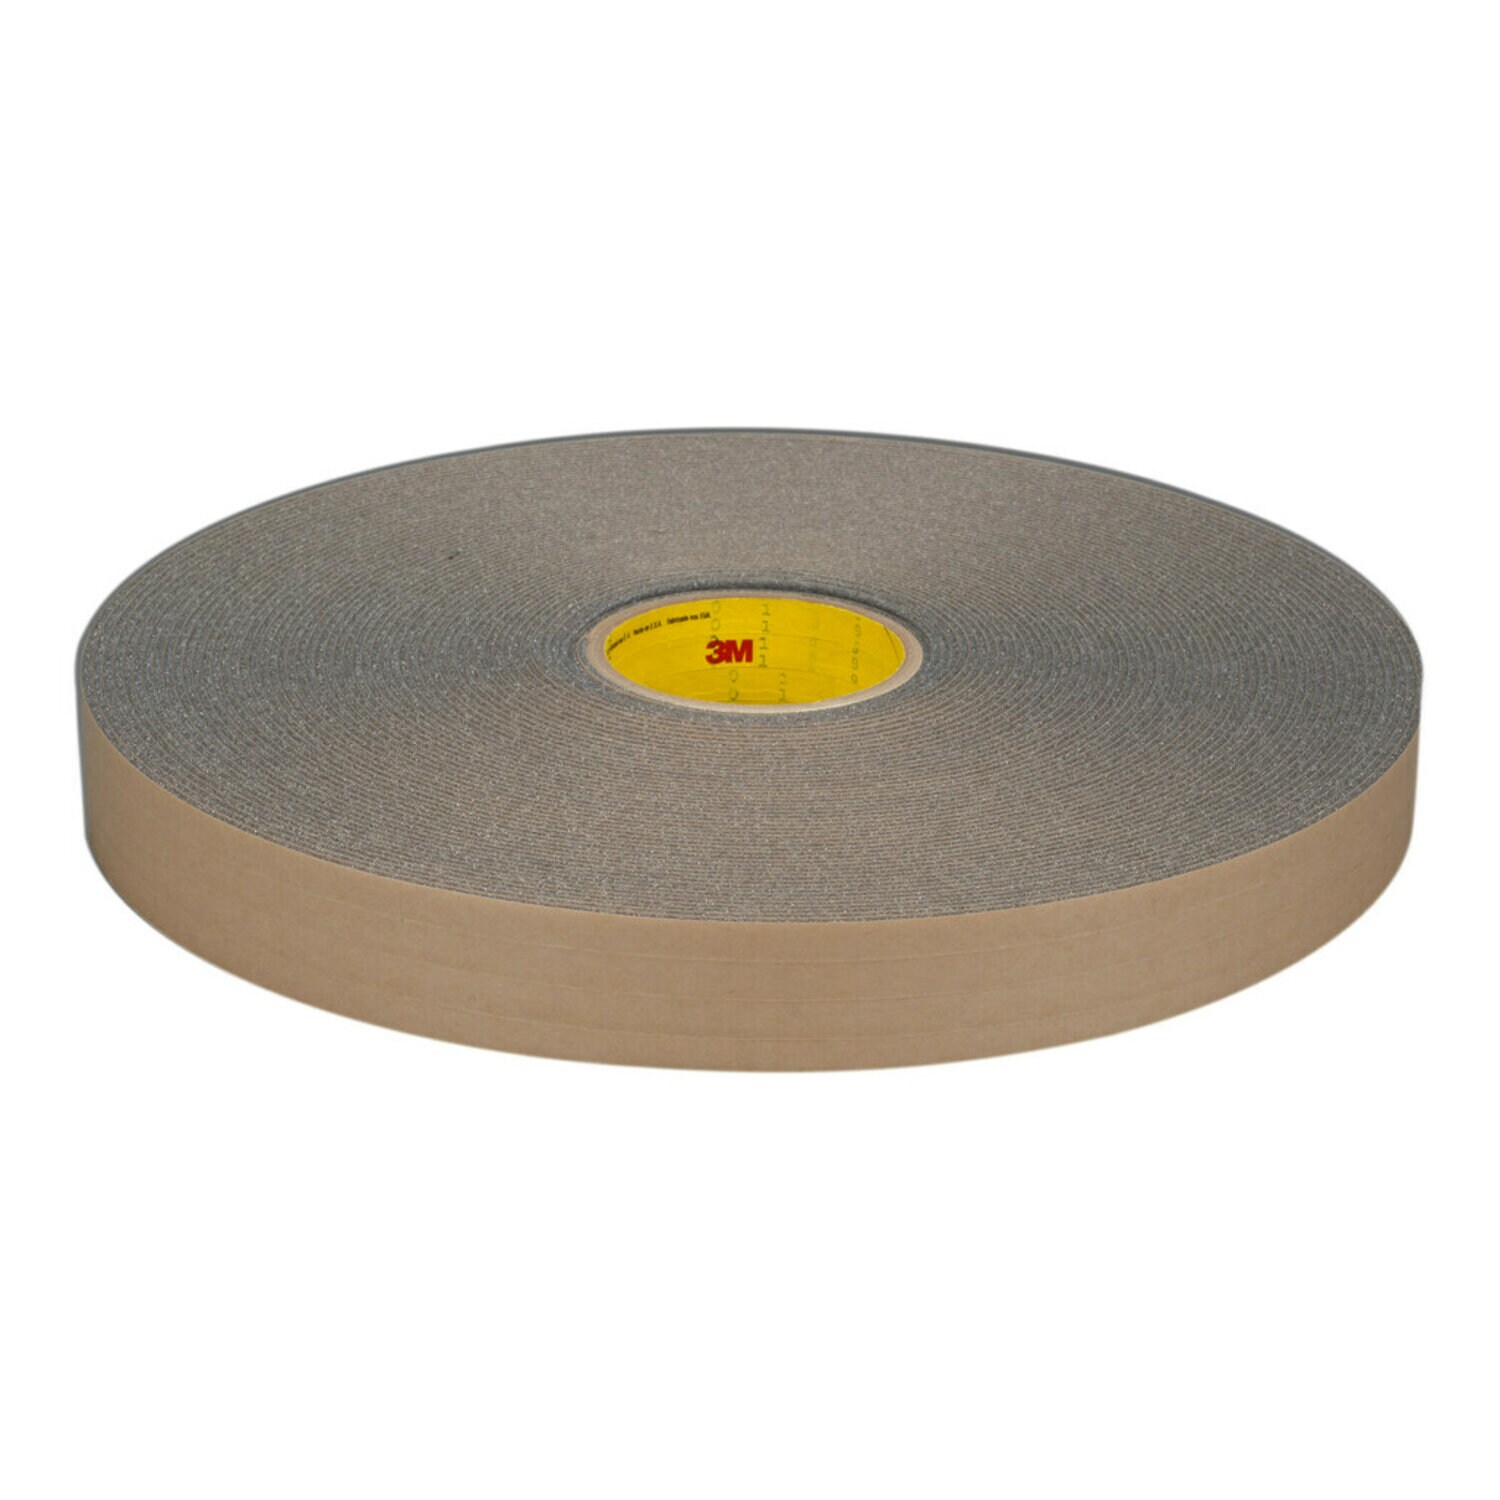 7100018679 - 3M Urethane Foam Tape 4318, Charcoal Gray, 3/4 in x 36 yd, 125 mil, 12
rolls per case